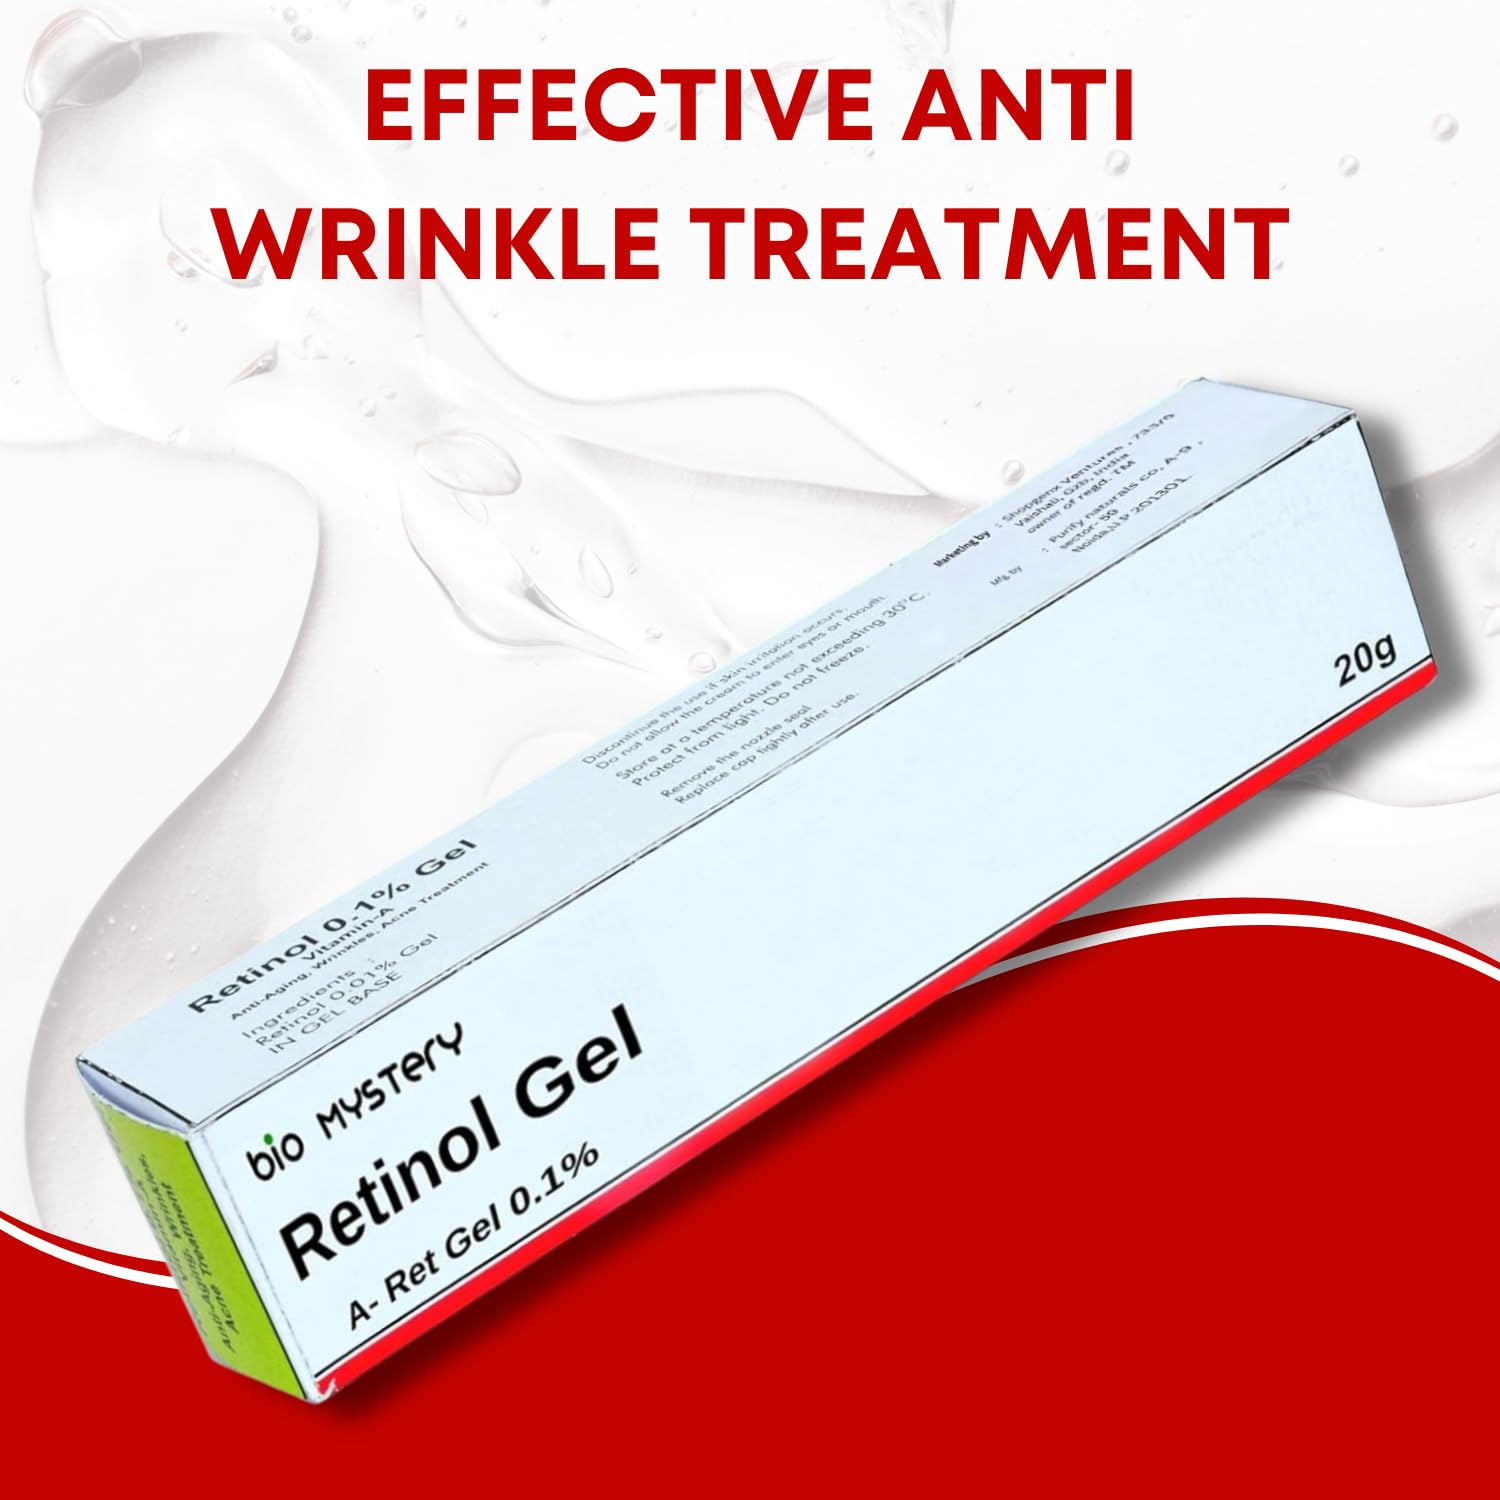 Bio Mystery Retinol Gel 0.1 Vitamin A Repairs Fine Lines & Wrinkles, Scar Treatment, Sun Spots, Anti-Aging Formula (20 Gram / 0.7 Oz)